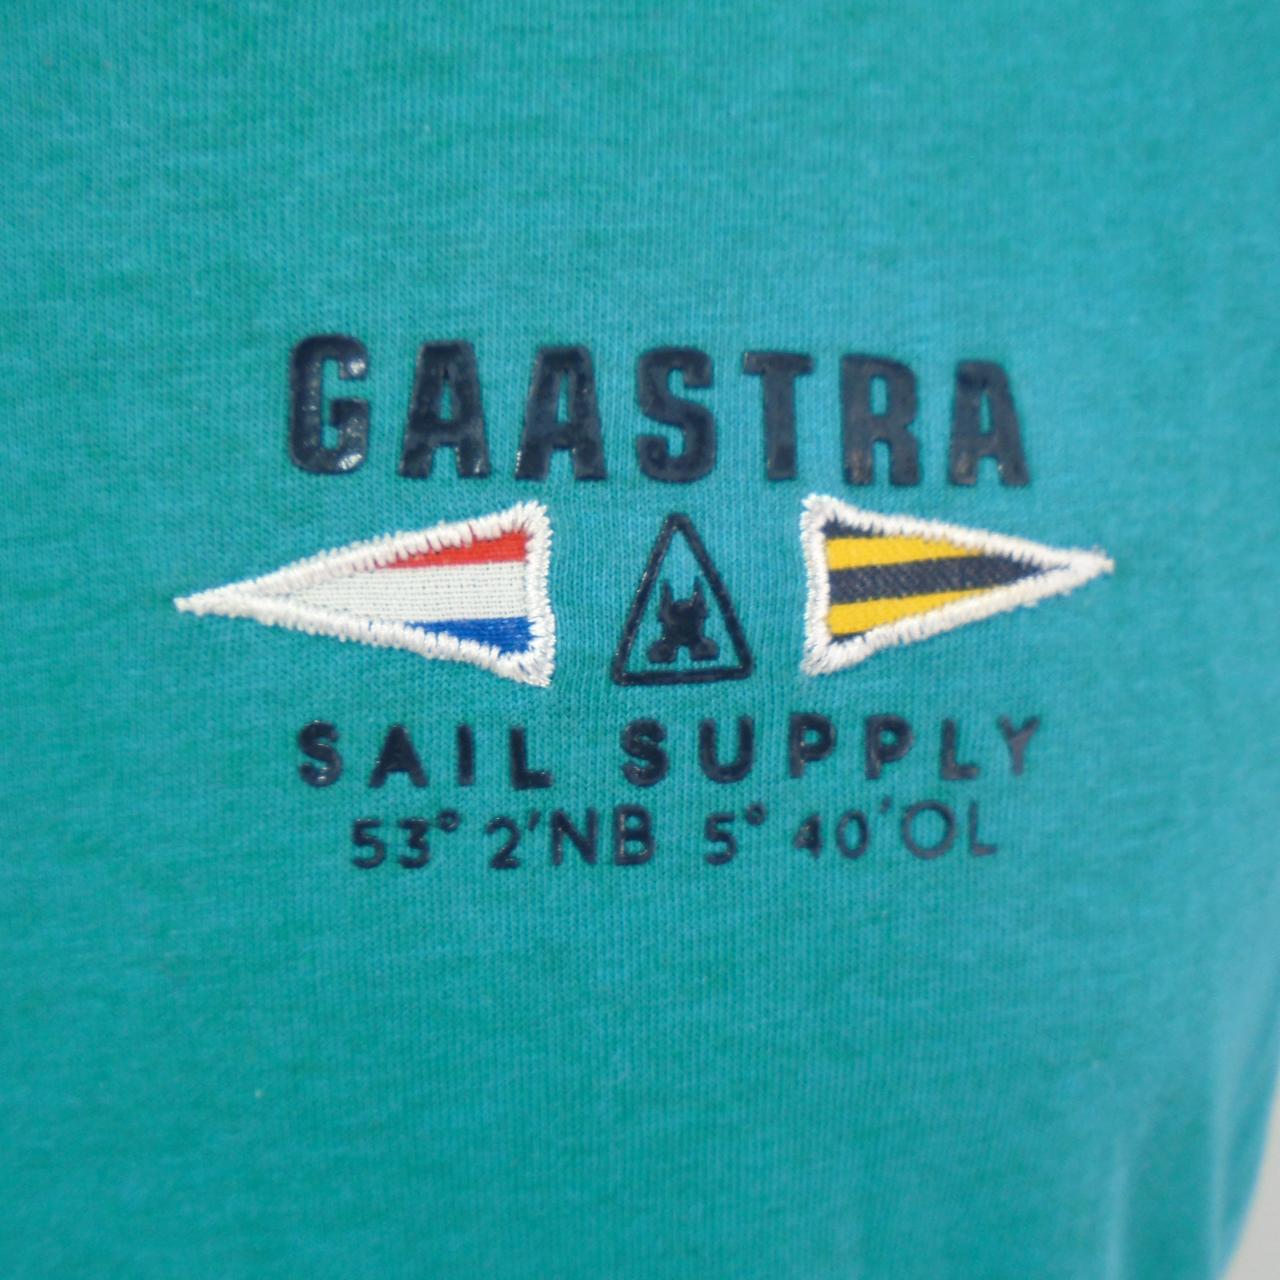 T-Shirt Homme Gaastra.  Vert.  L. Utilisé.  Bien